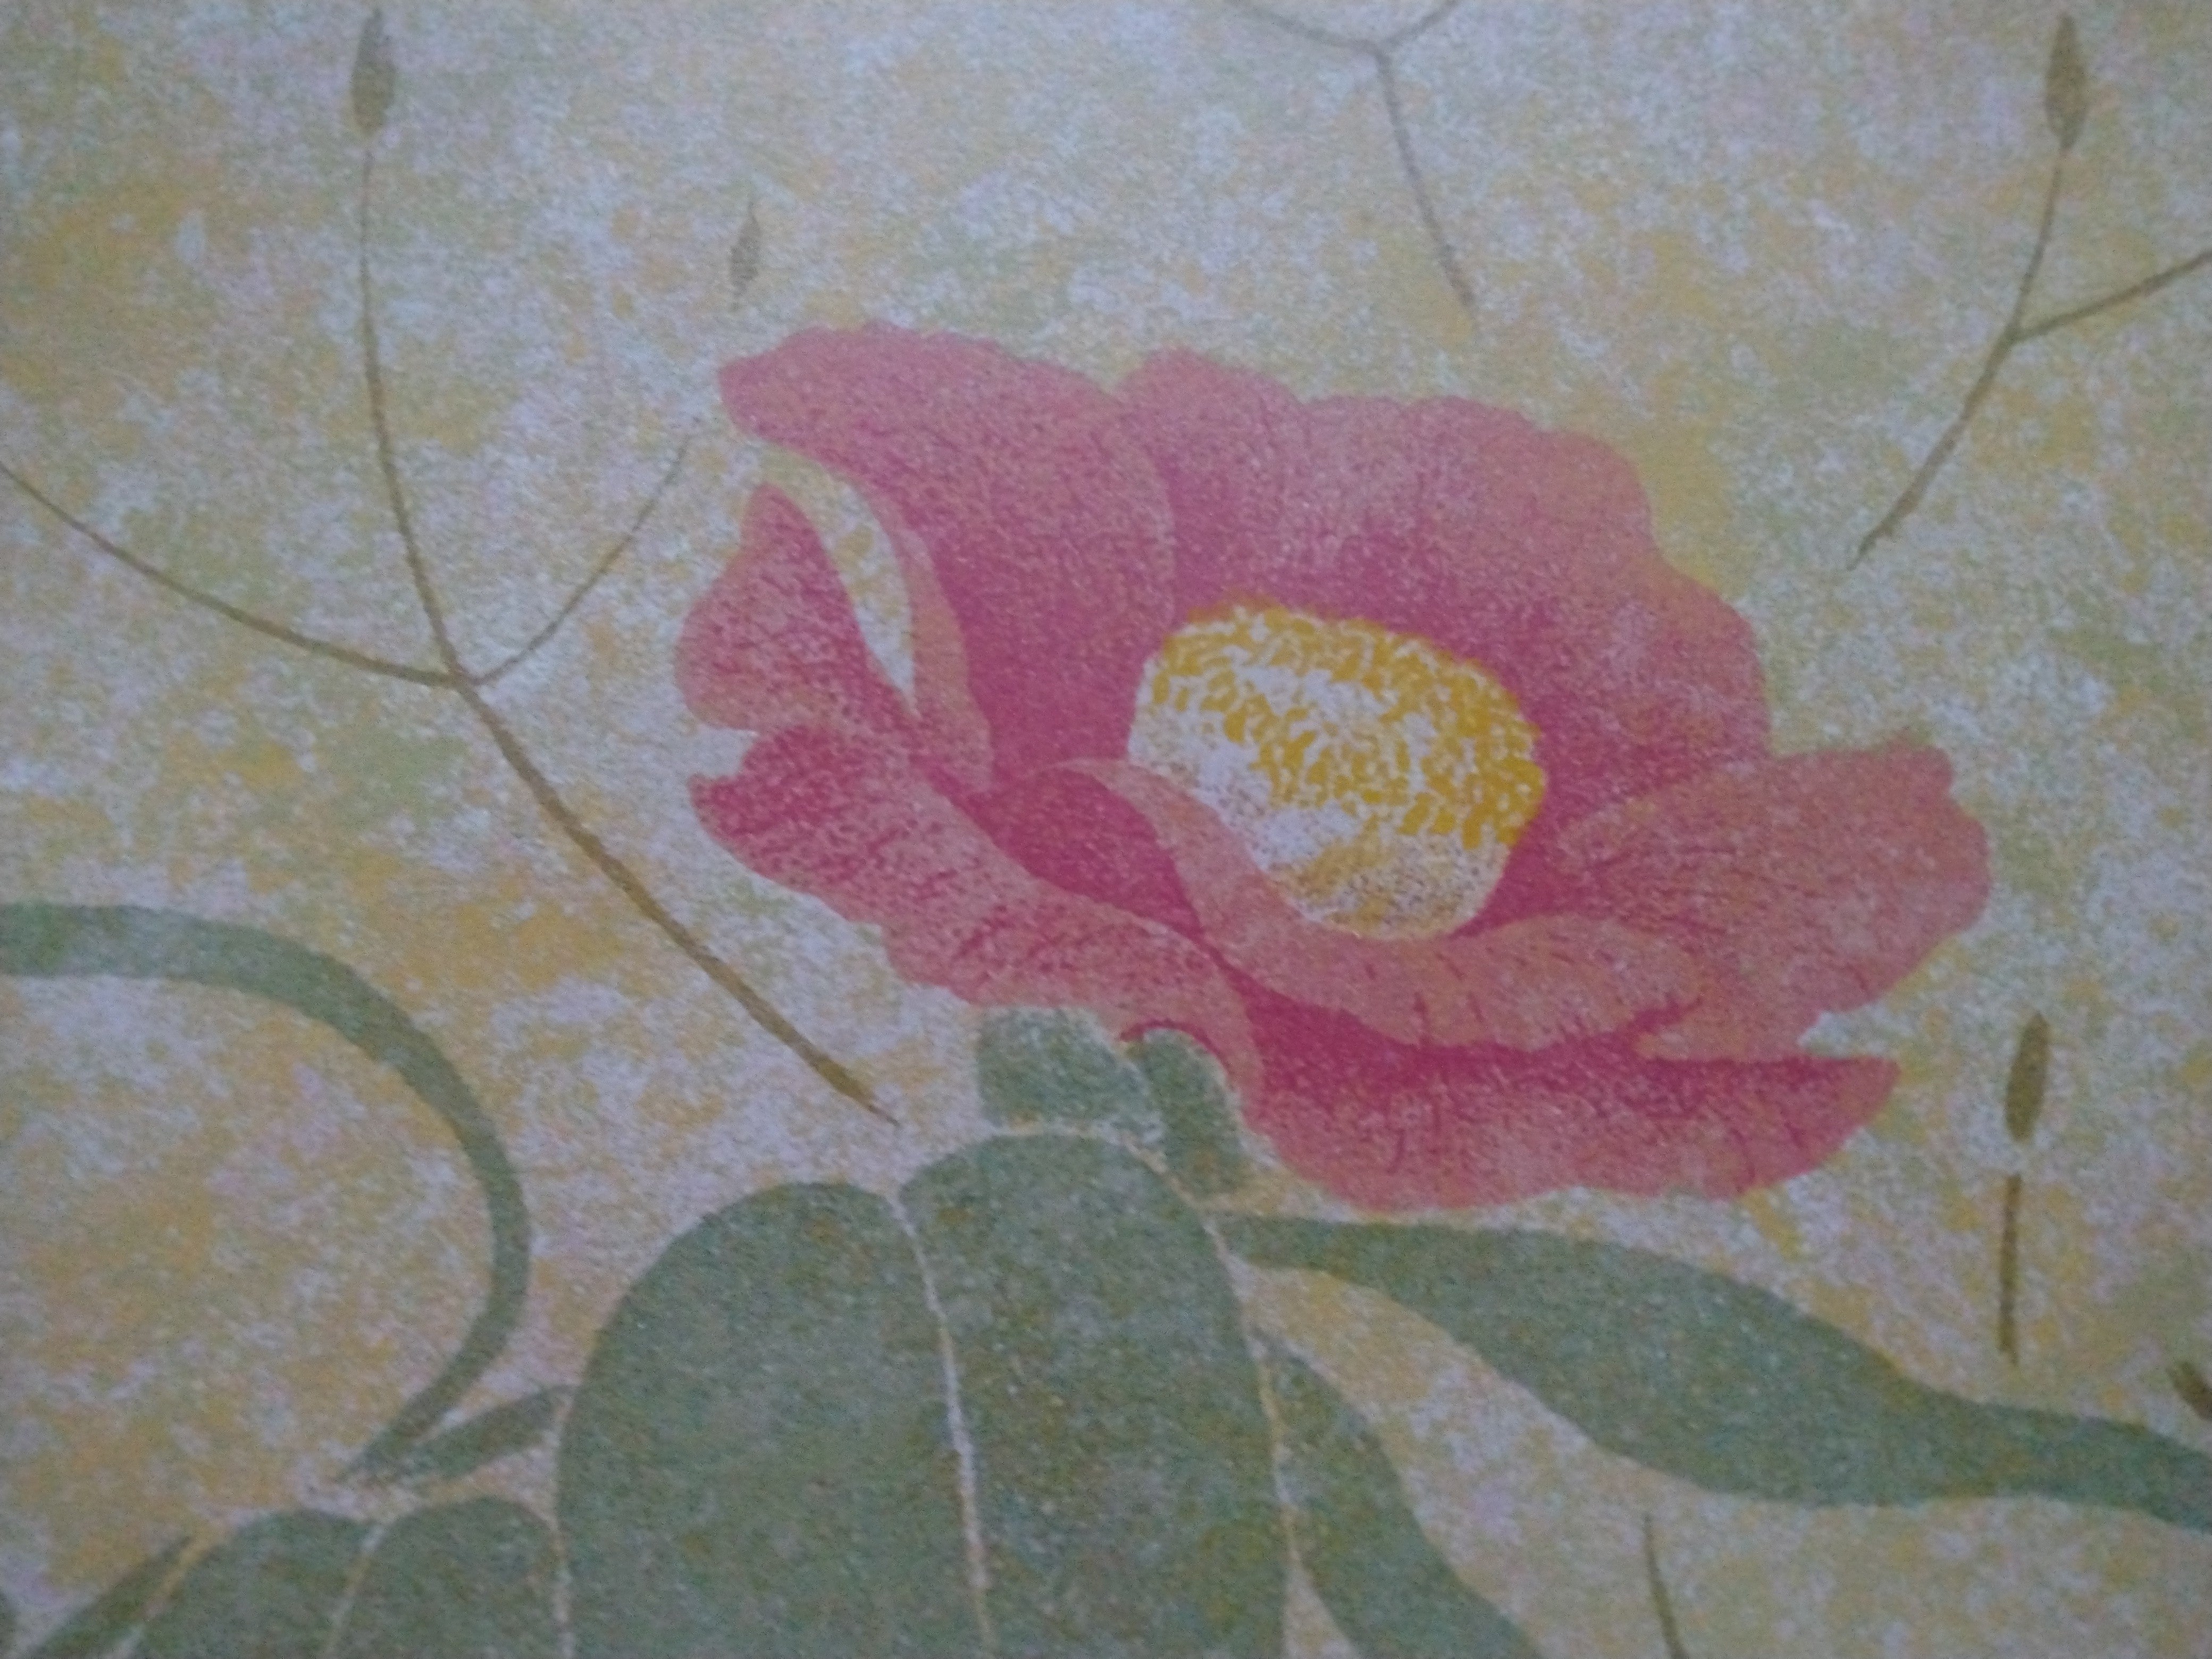 Katsuda Yukio Framed Silkscreen Print, "No. 106" Camellia